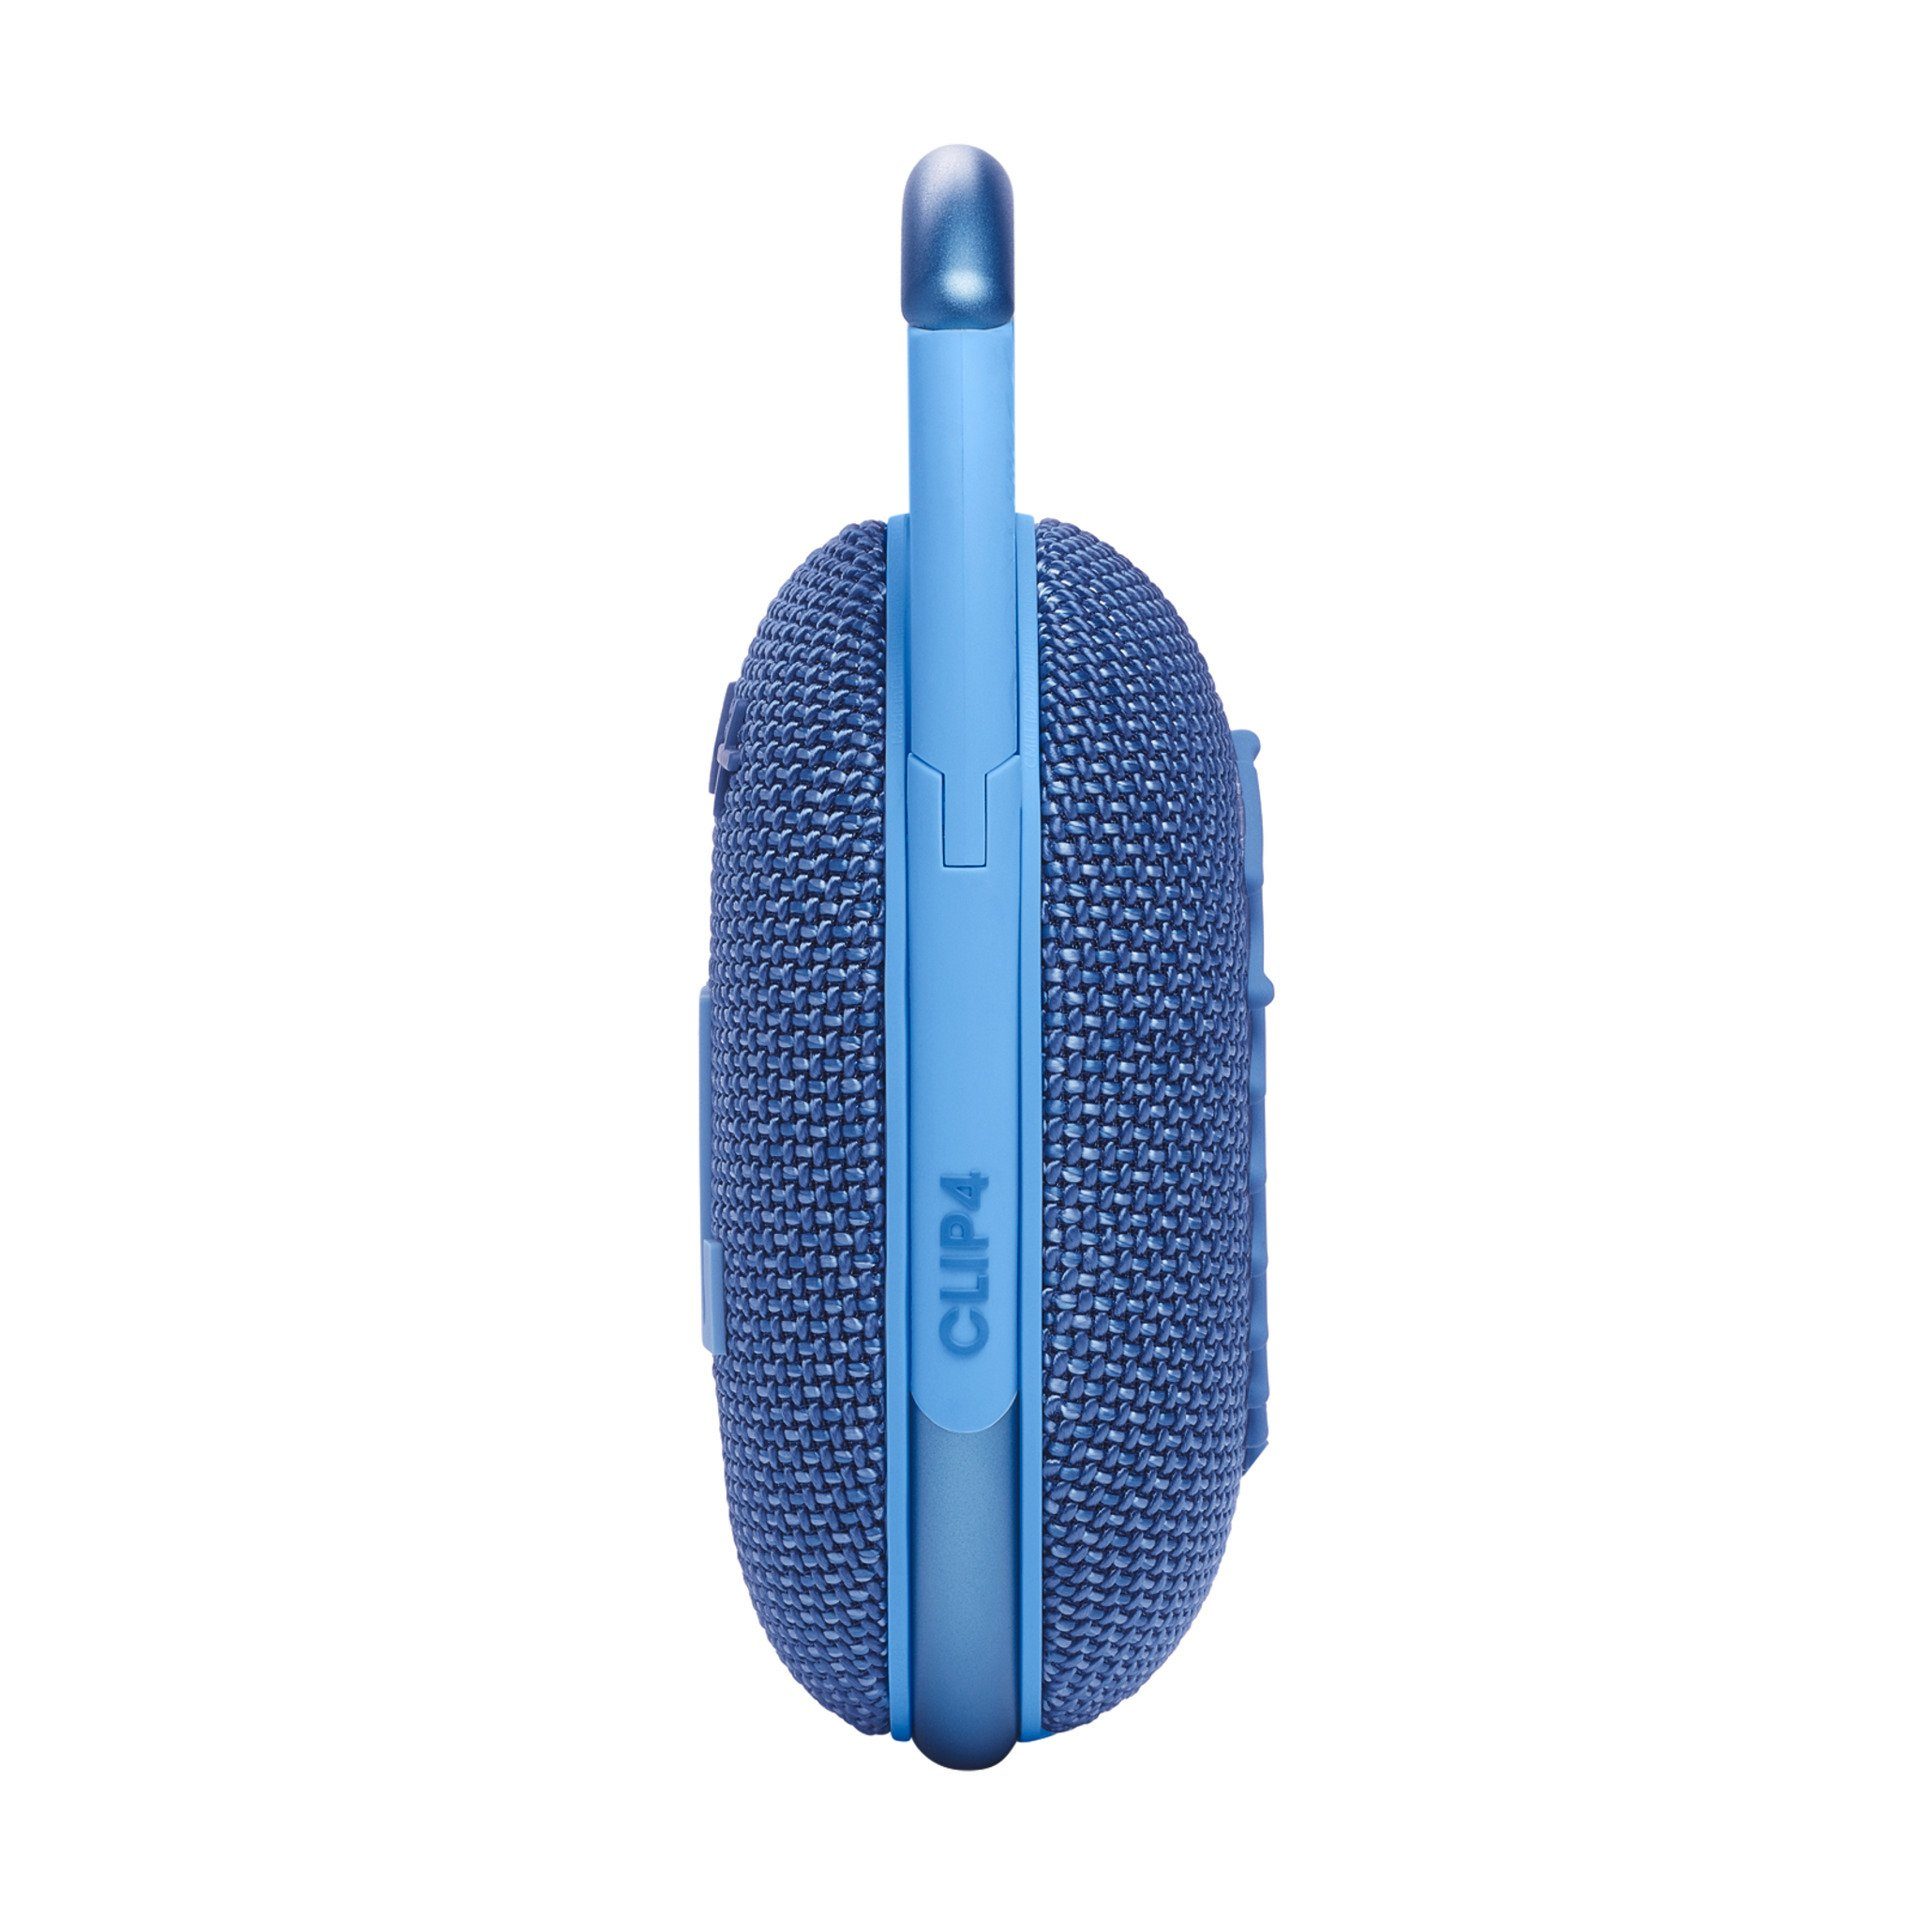 W) 5 4 Bluetooth-Lautsprecher Clip ECO Blau (Bluetooth, JBL